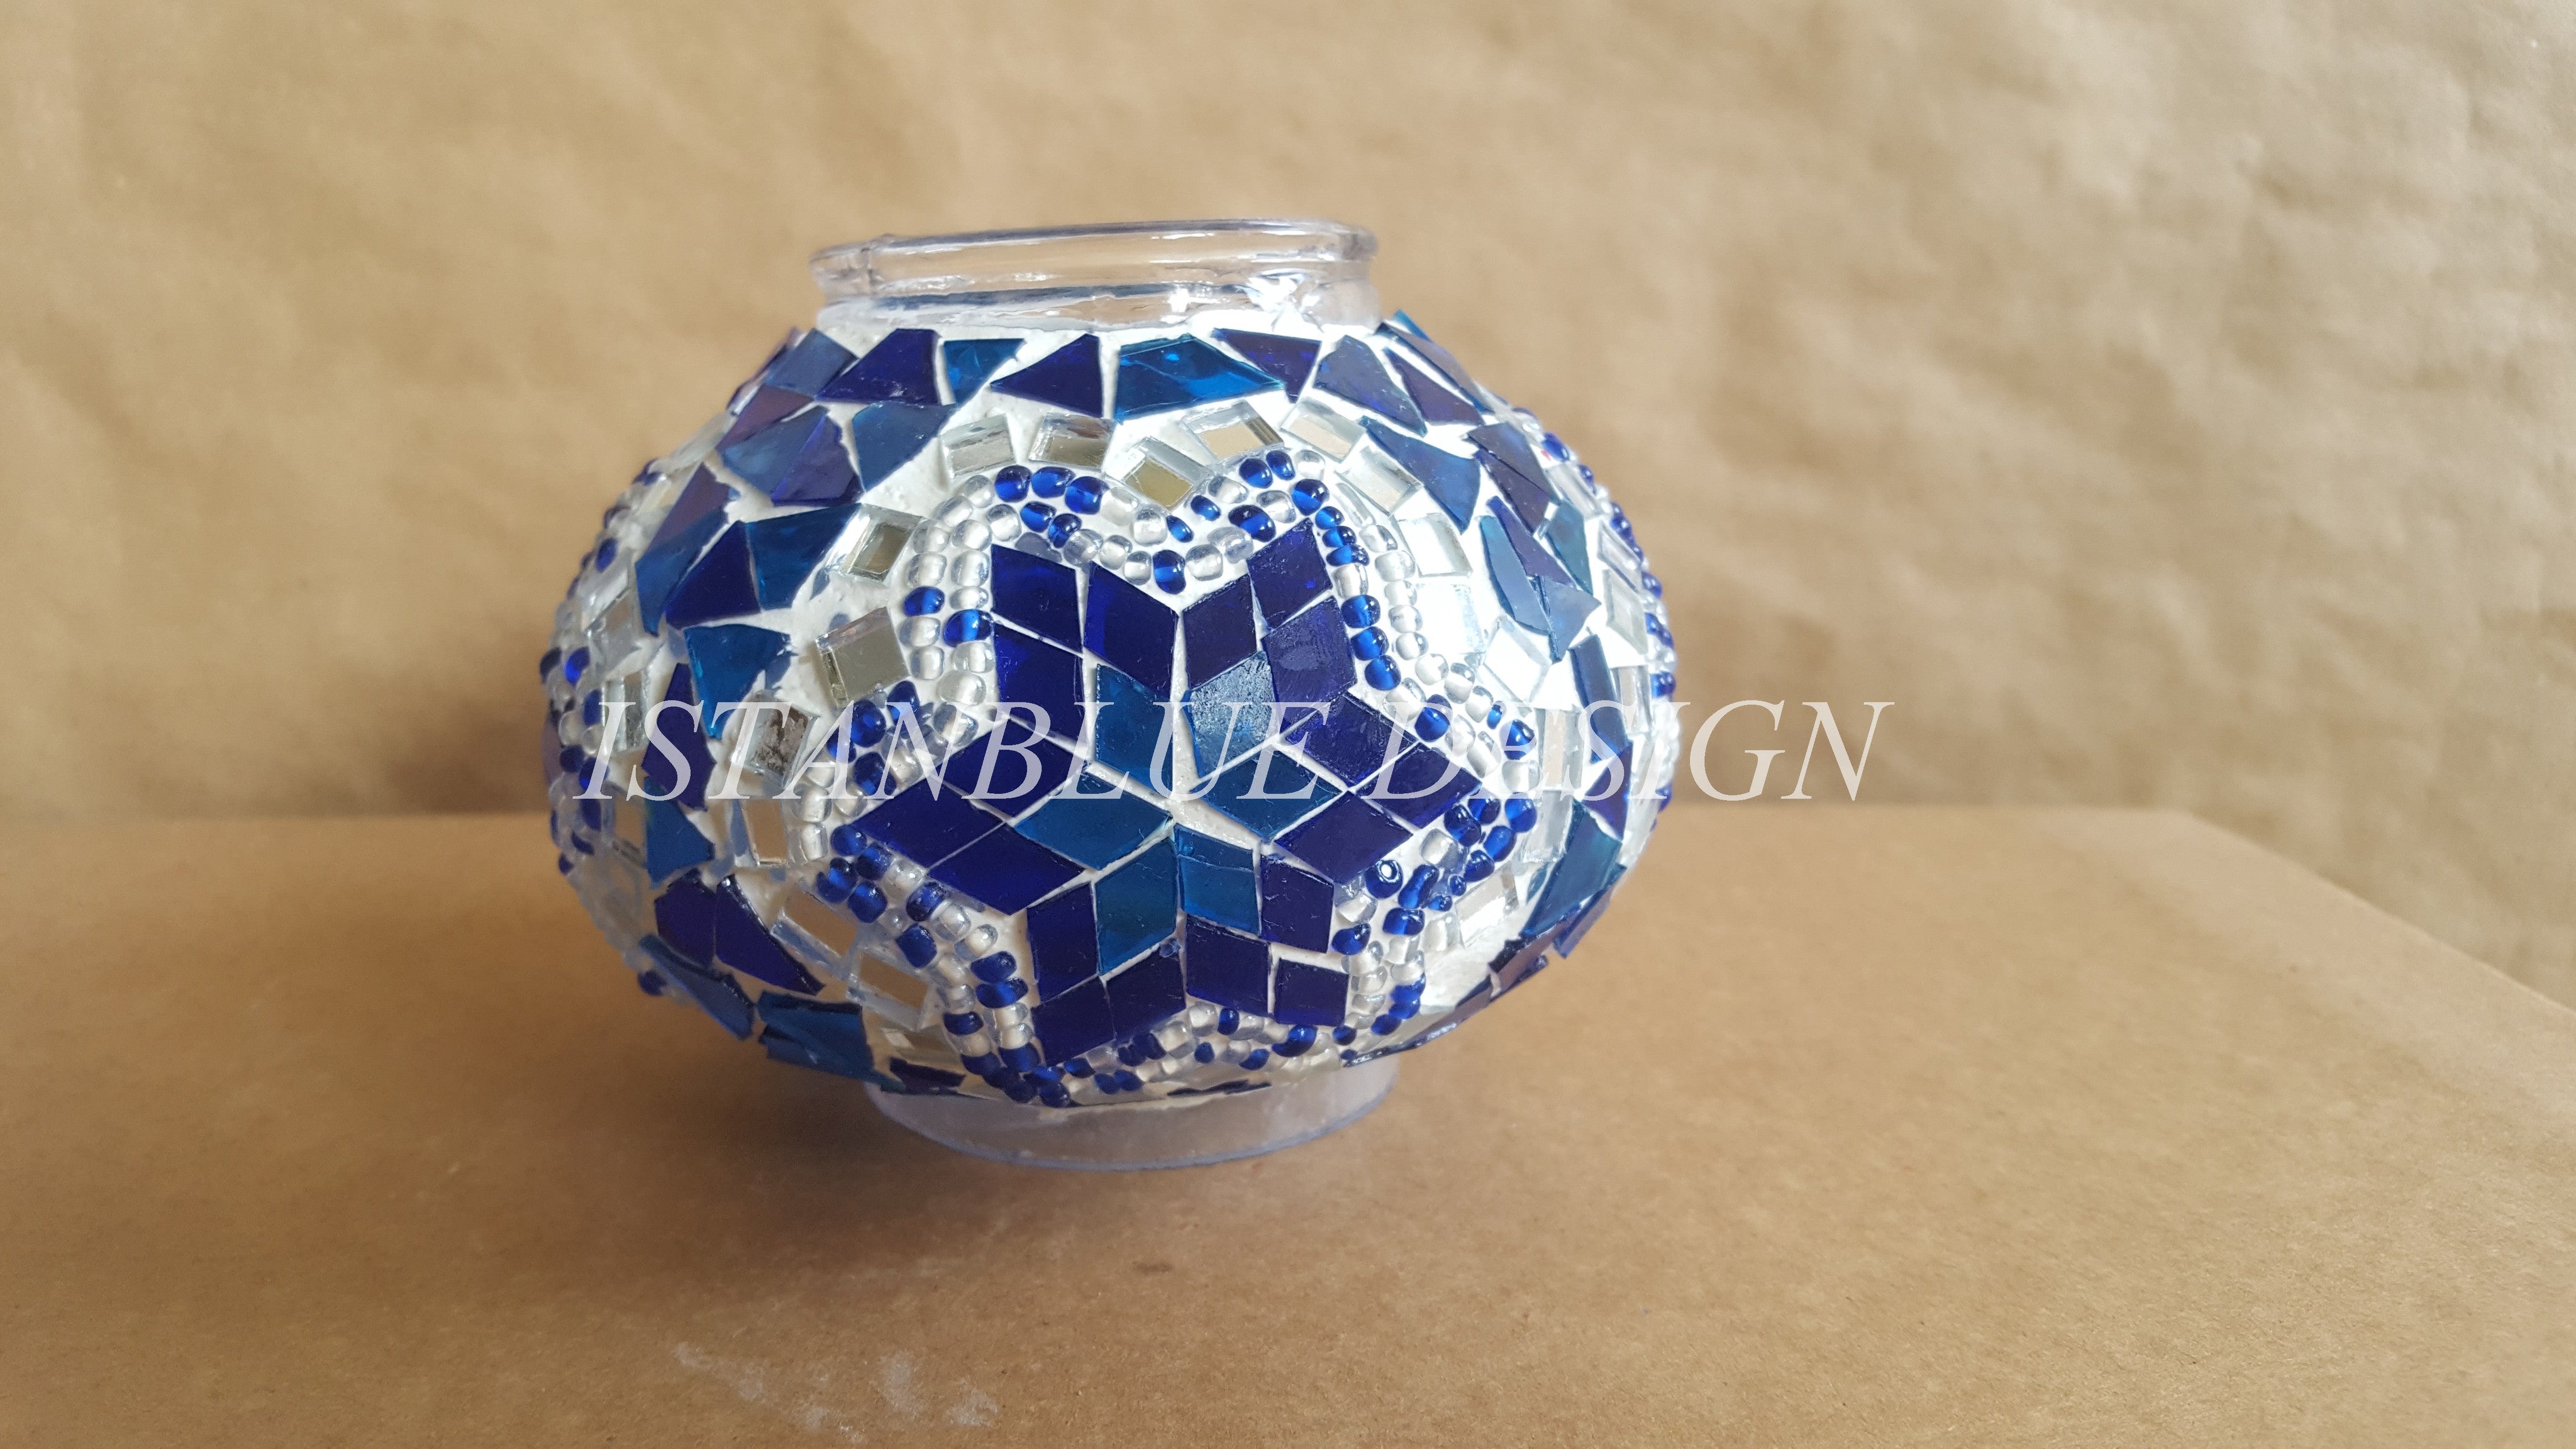 Turkish Handmade Mosaic 4 Globe Sultan Chandelier - Mavi